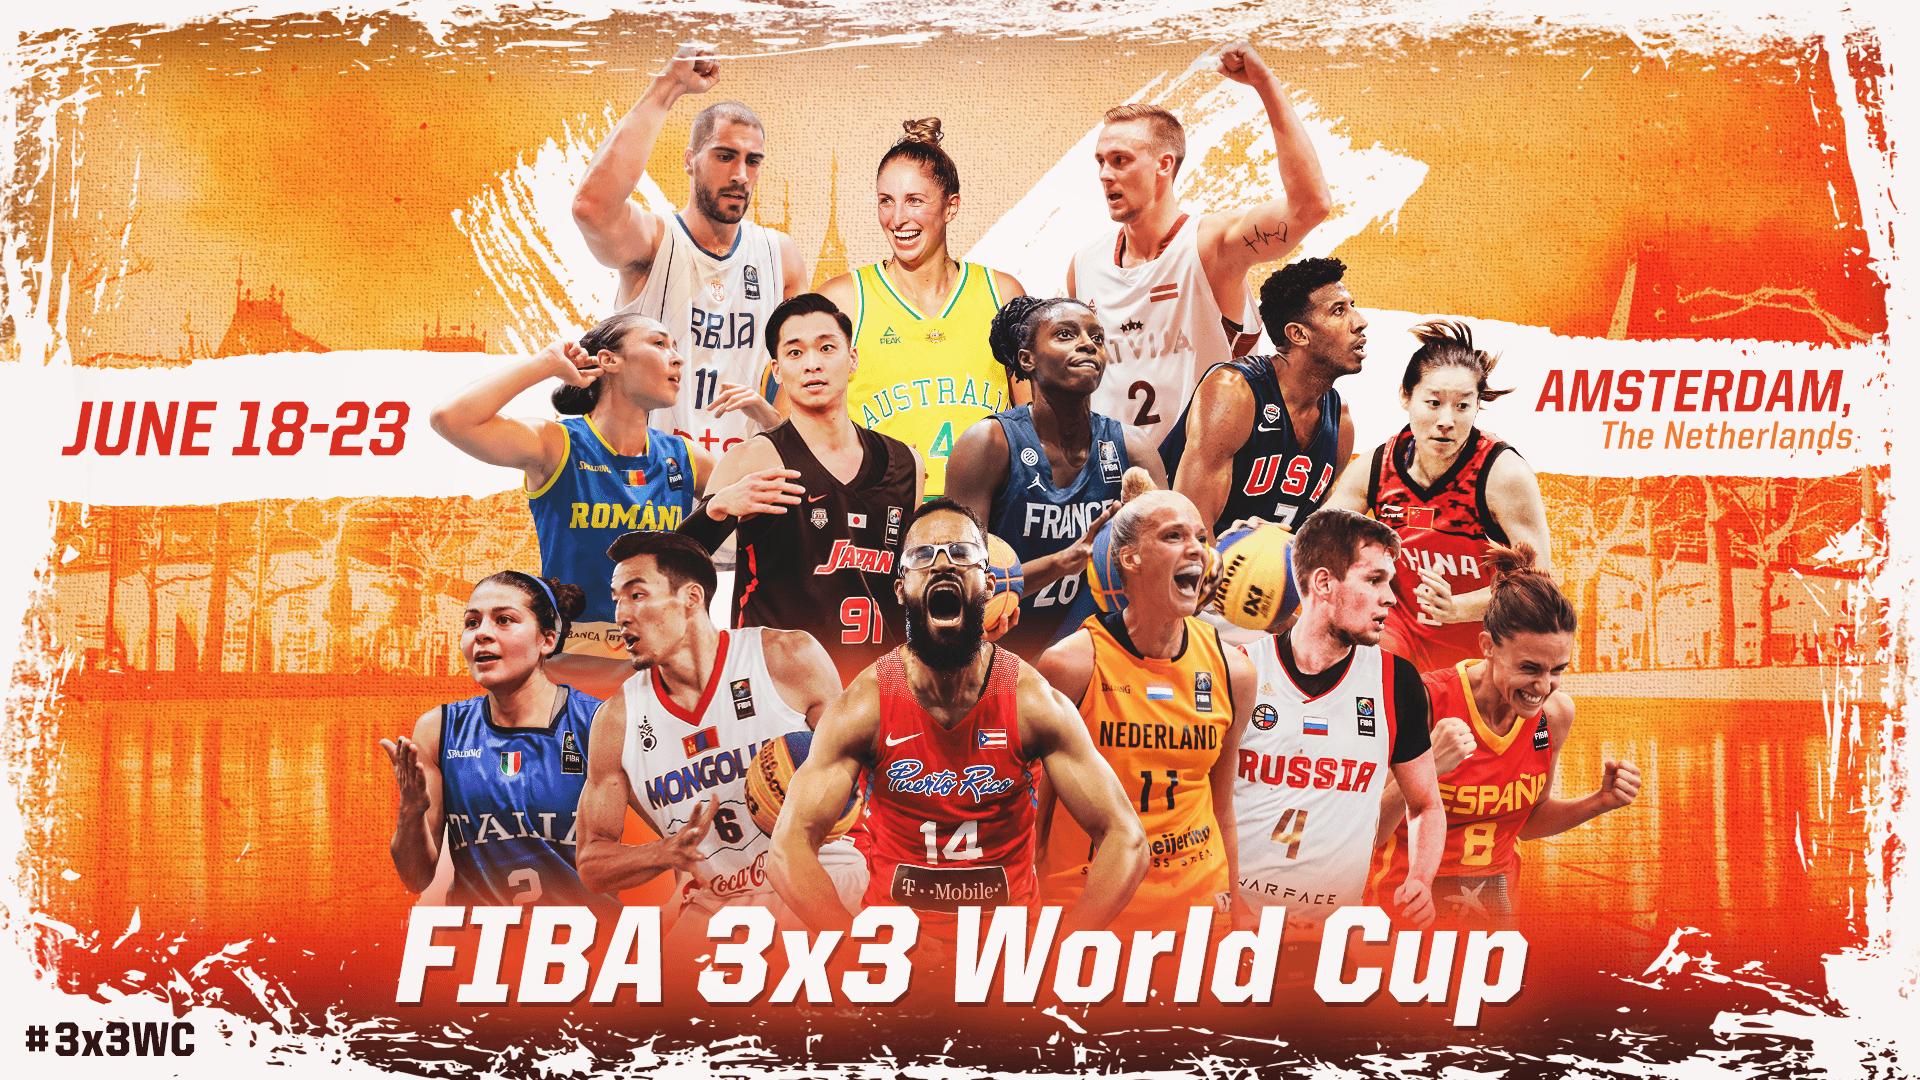 FIBA 3x3 World Cup 2019